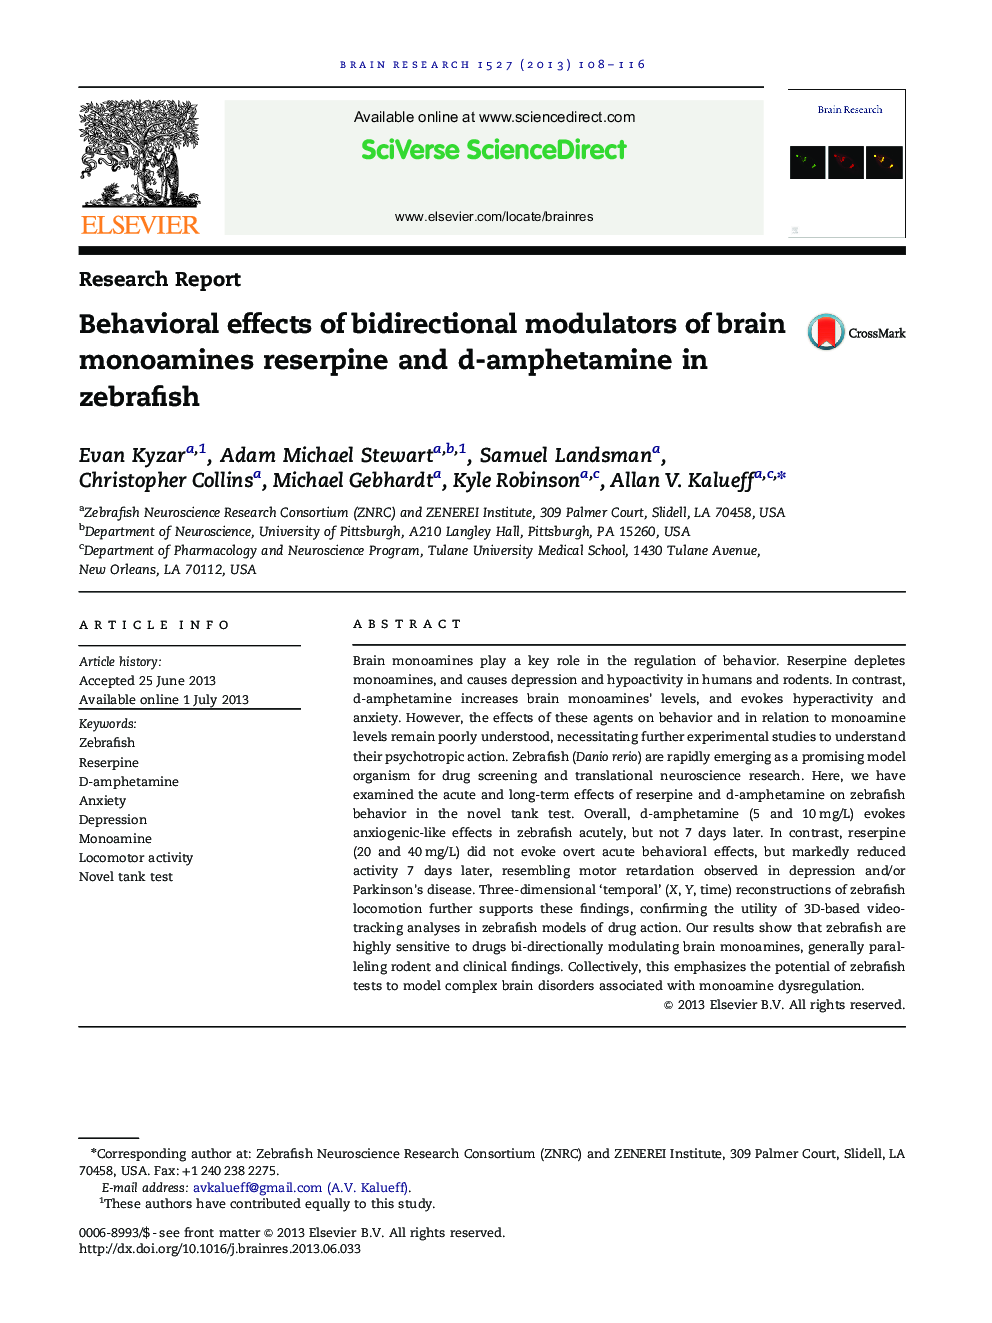 Behavioral effects of bidirectional modulators of brain monoamines reserpine and d-amphetamine in zebrafish